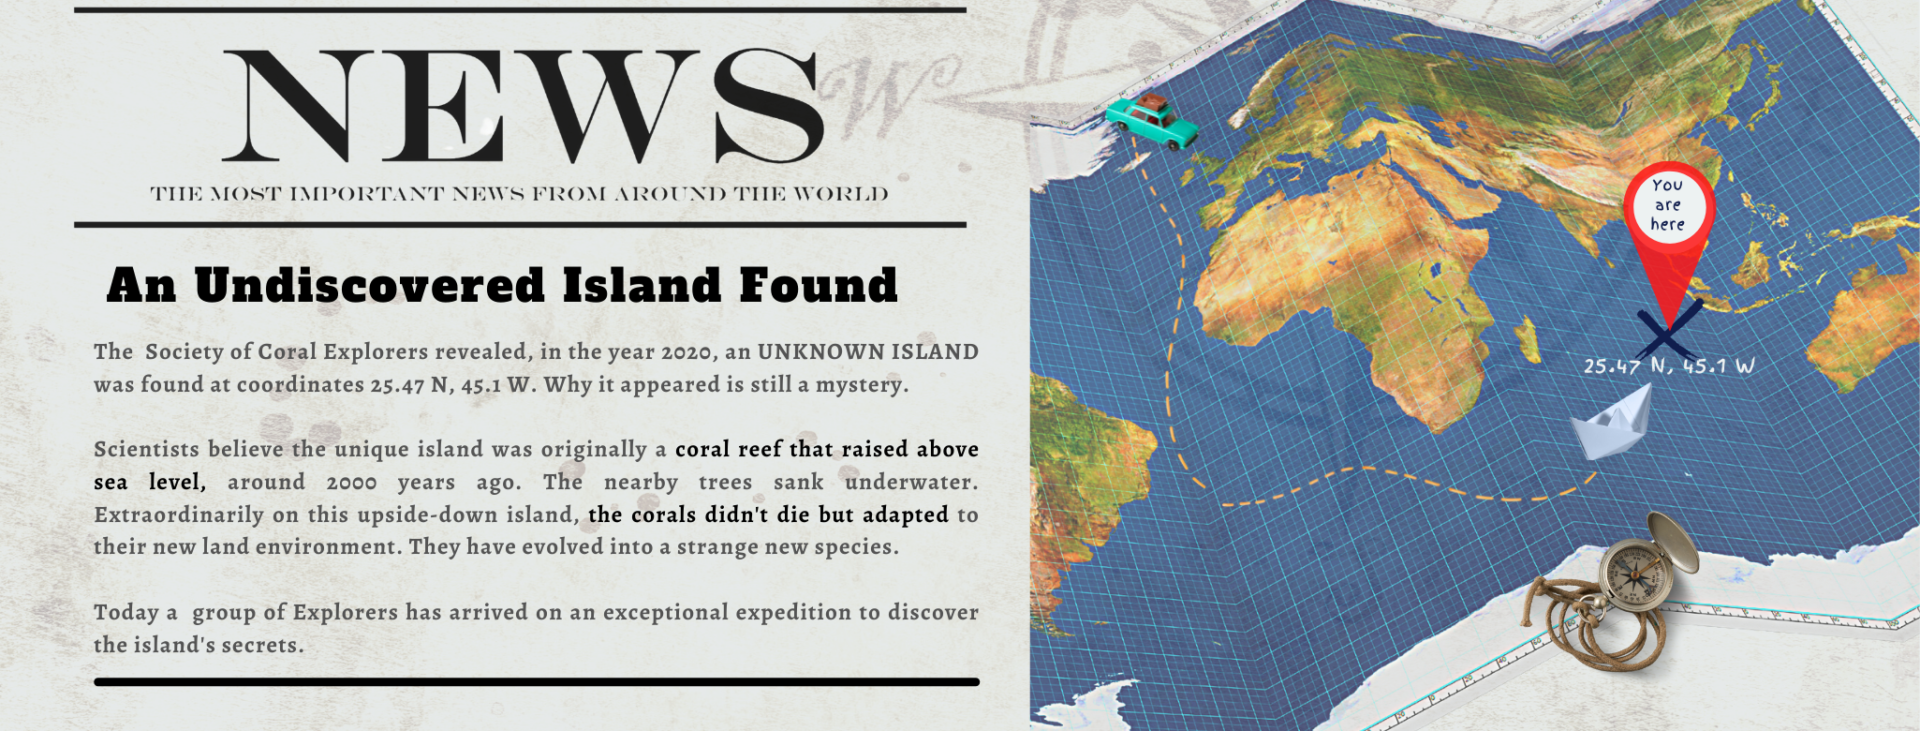 UNDiscovered Island